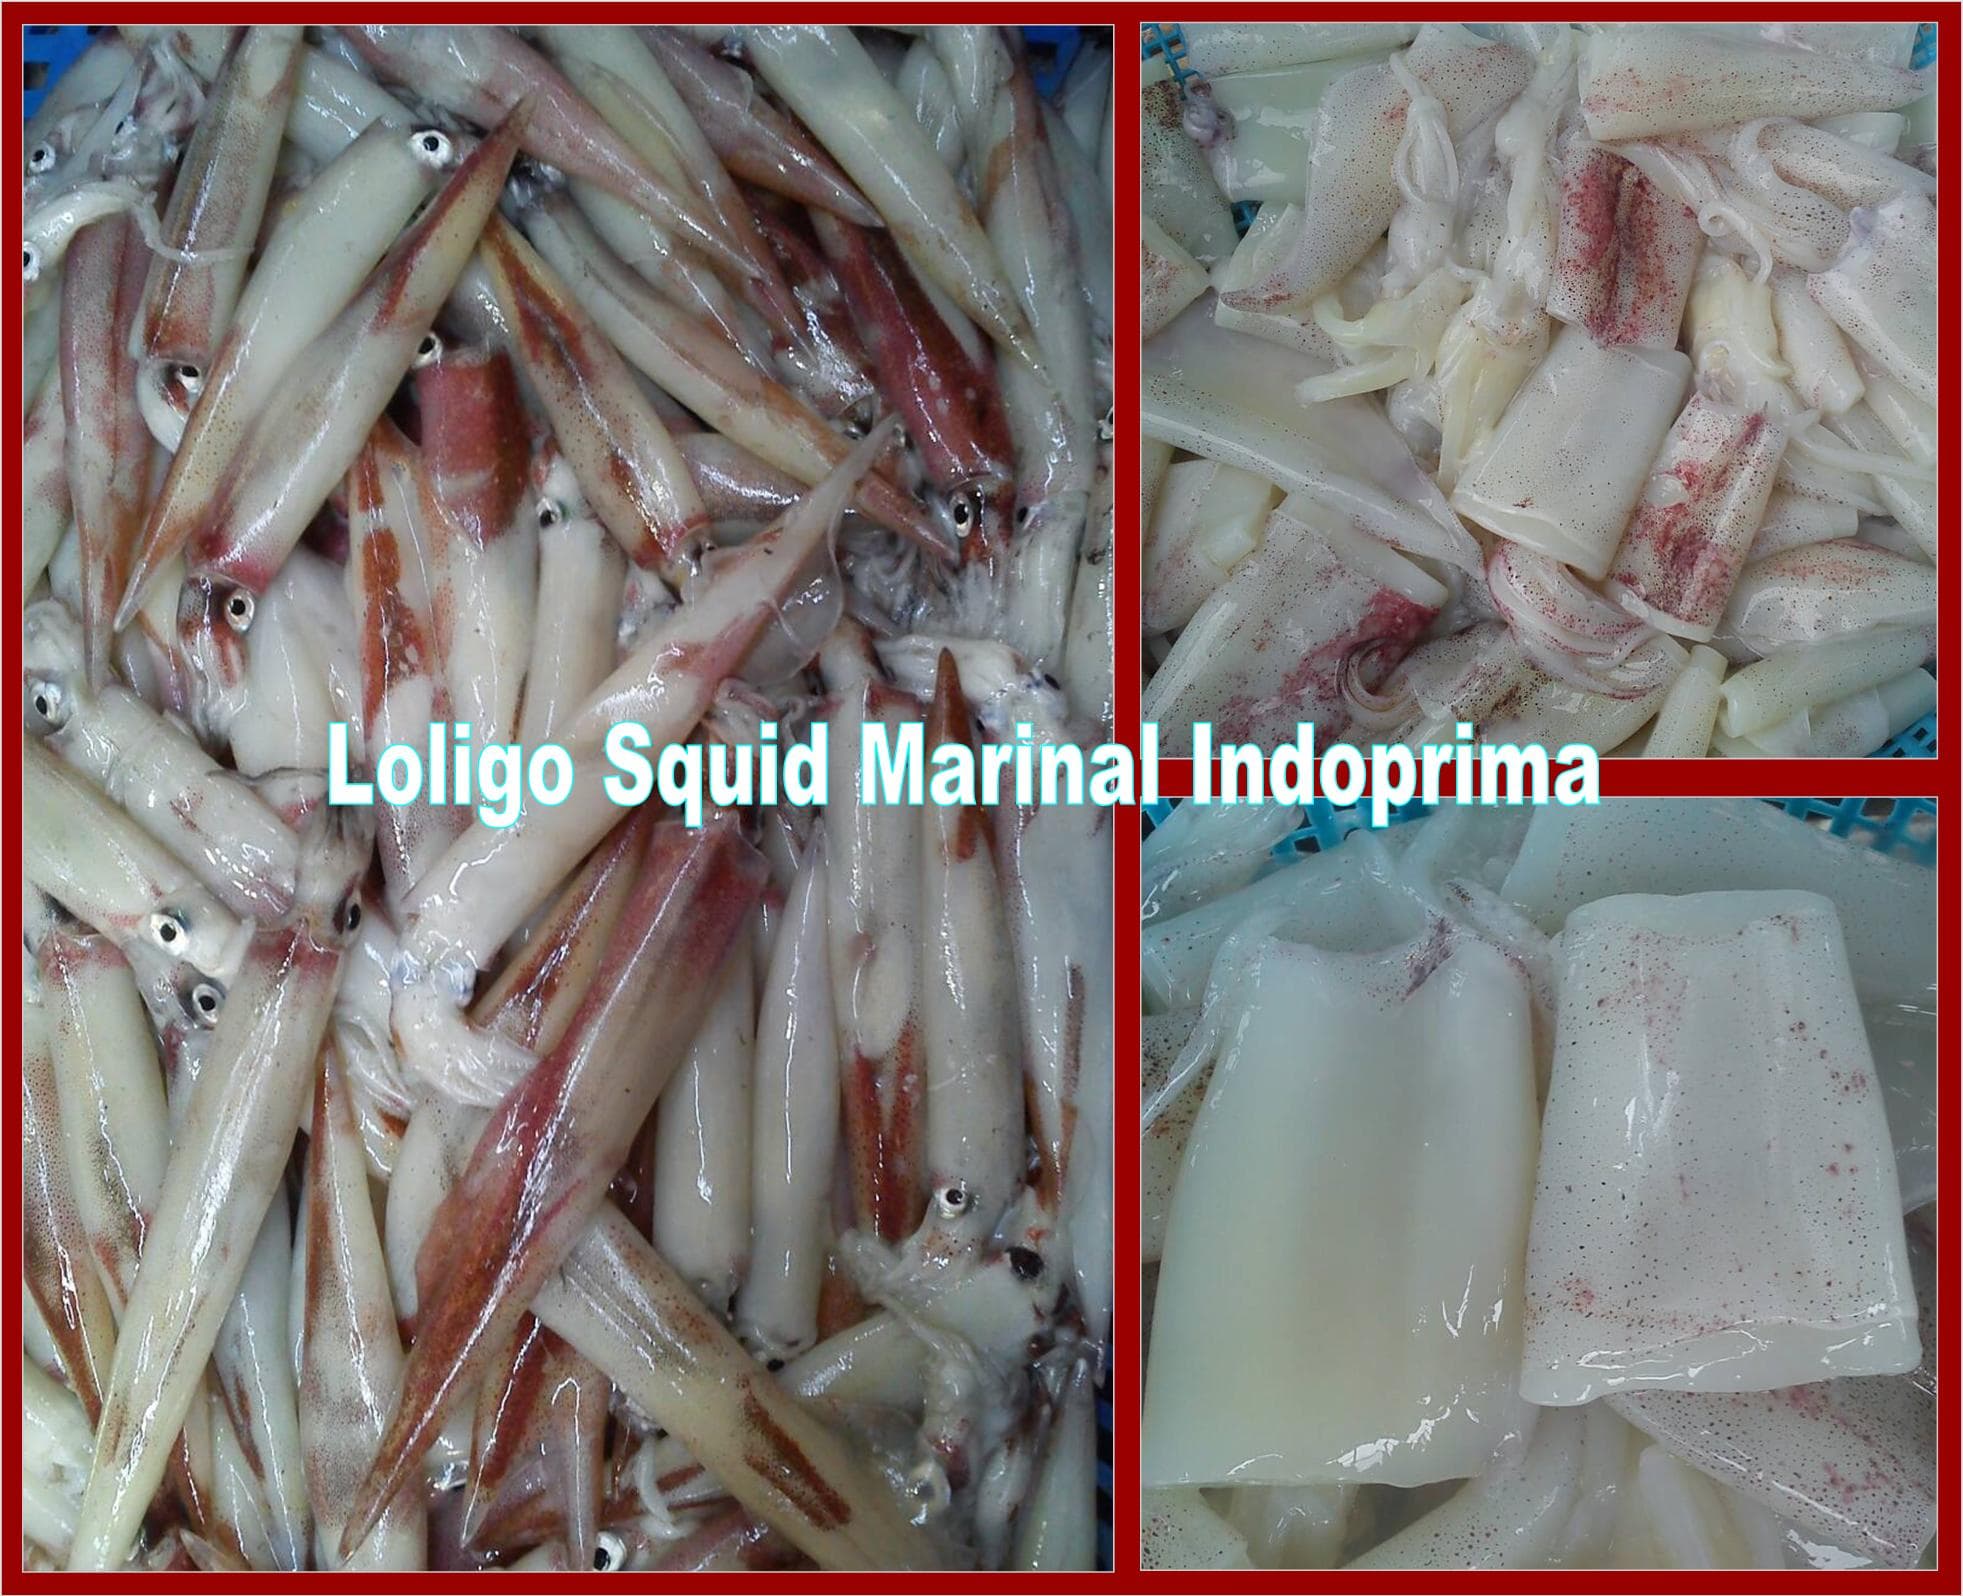 Frozen Loligo Squid